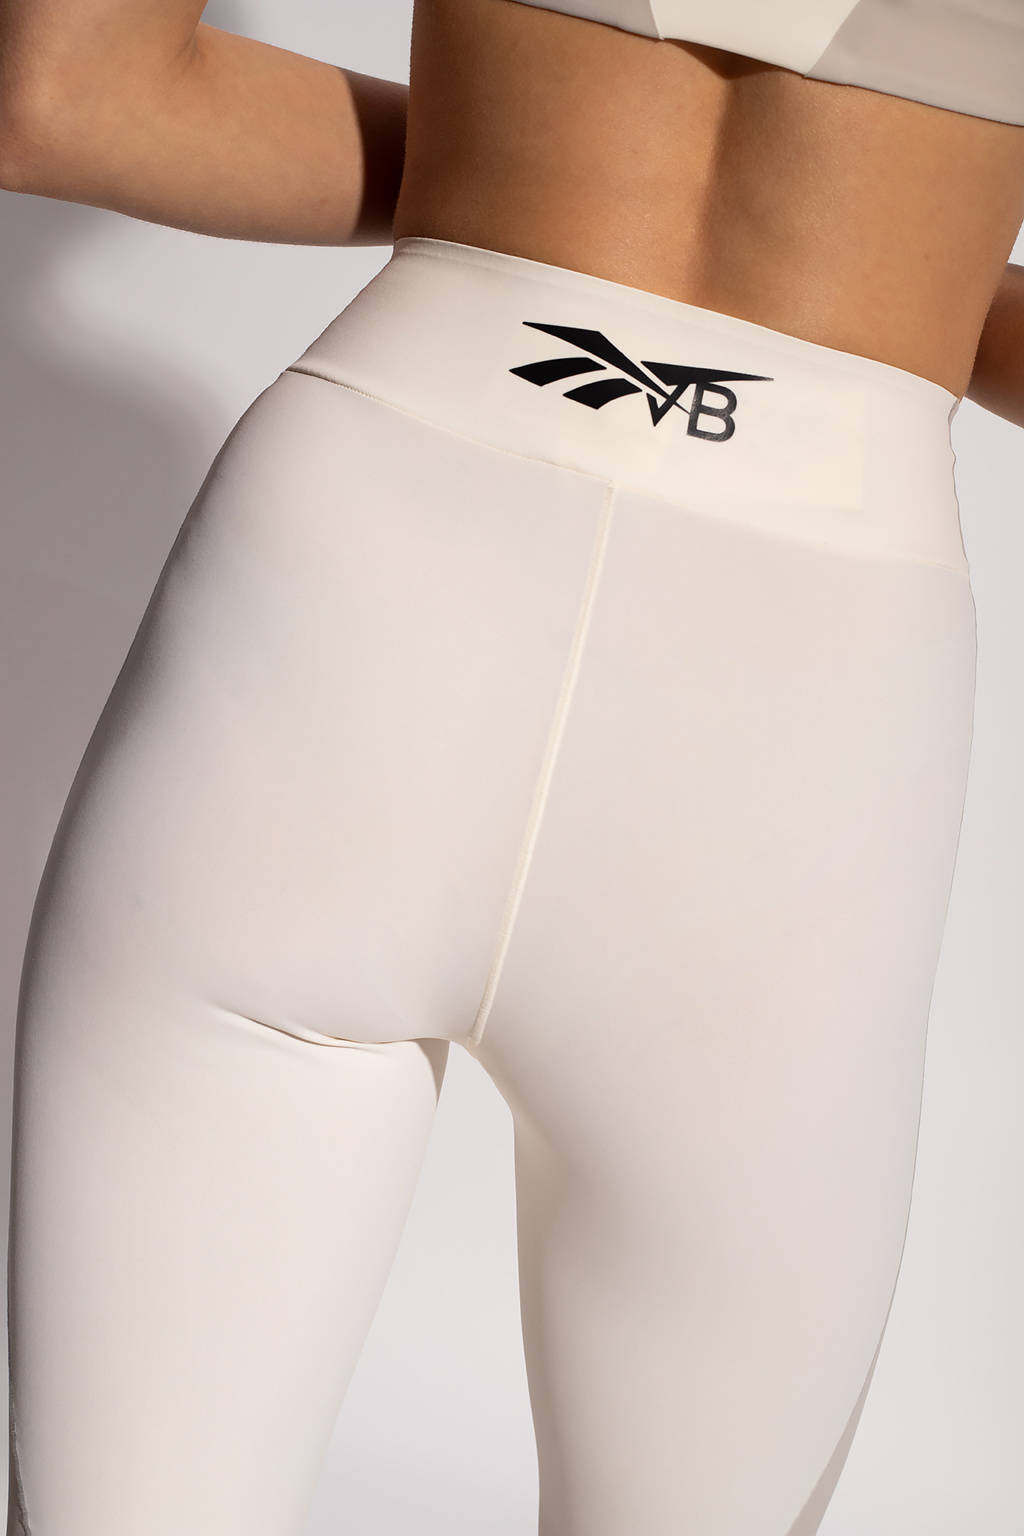 Reebok x Victoria Beckham Short leggings with logo